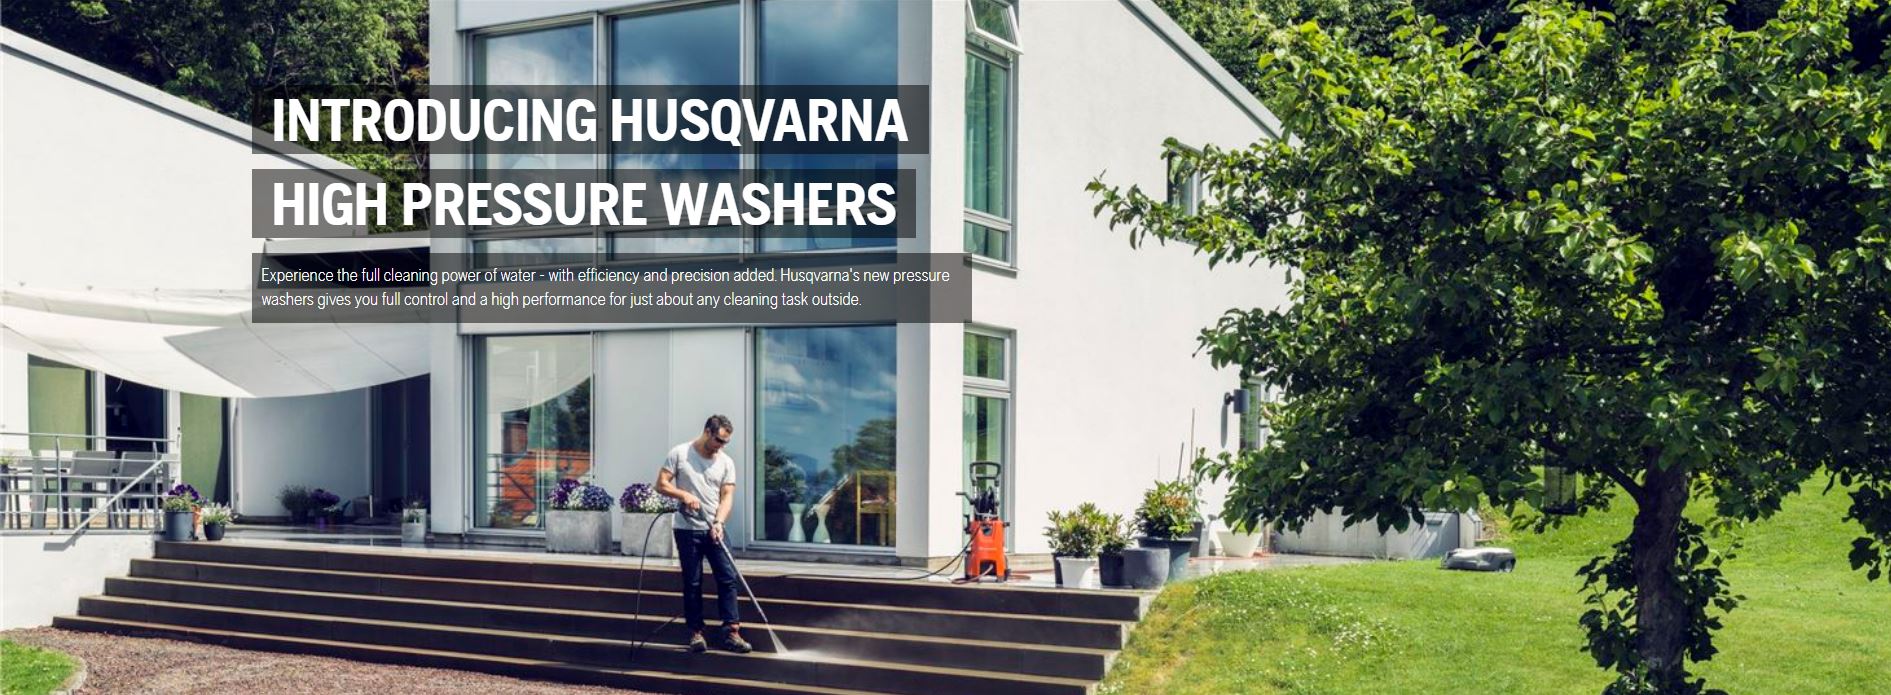 Introducing Husqvarna Pressure Washers